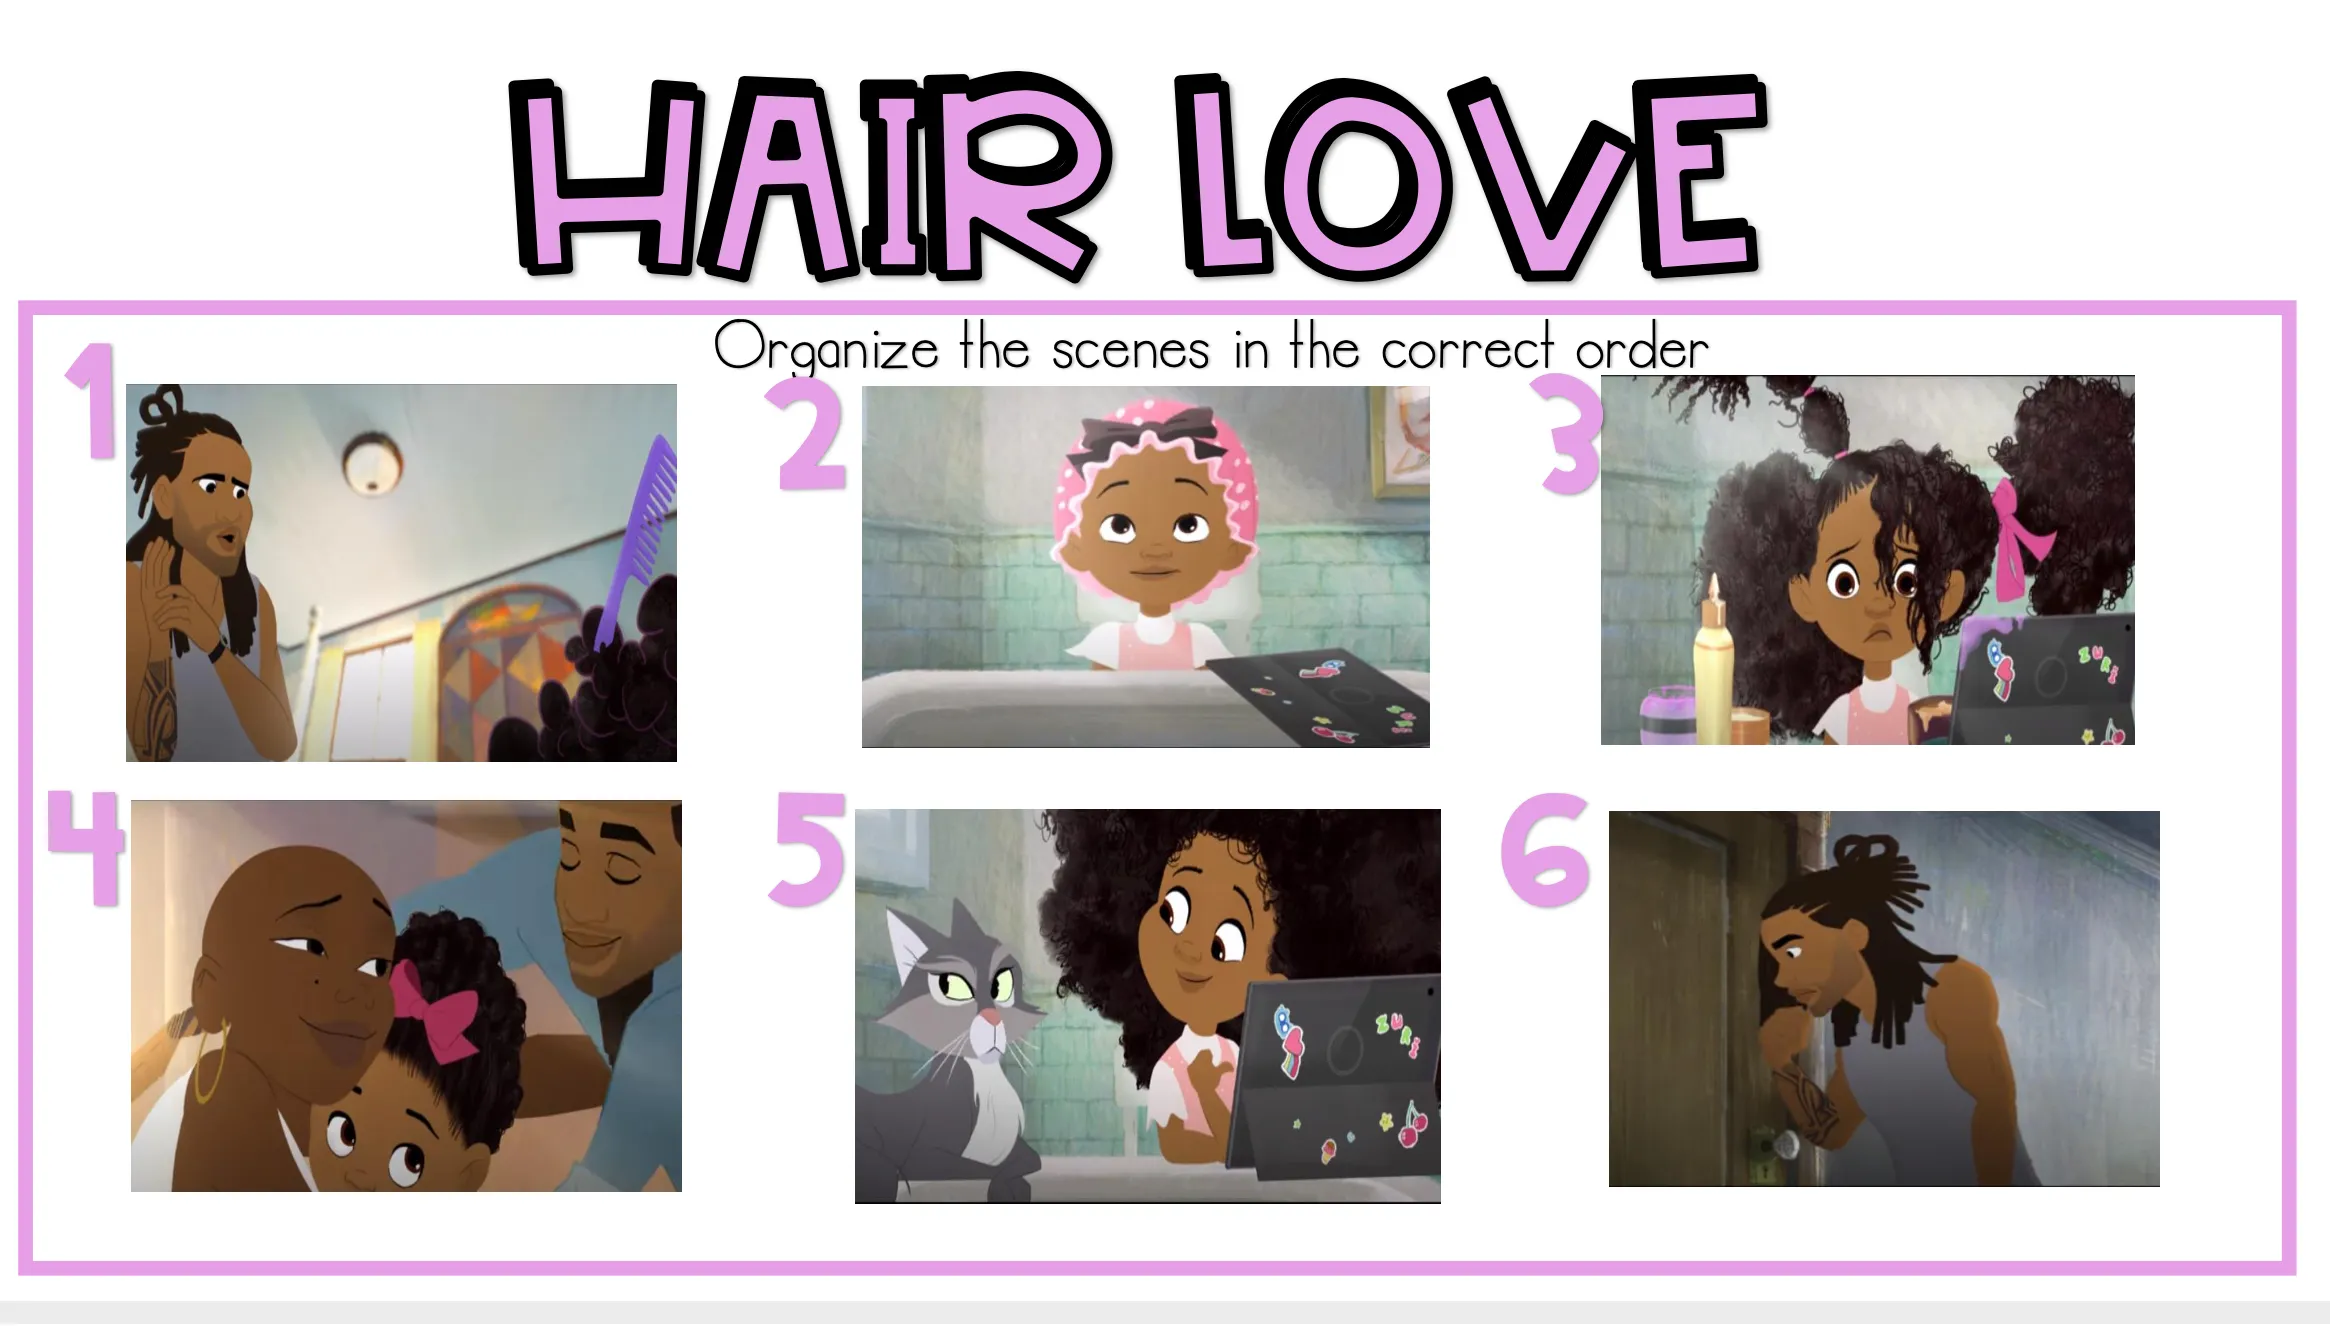 Hair love activities